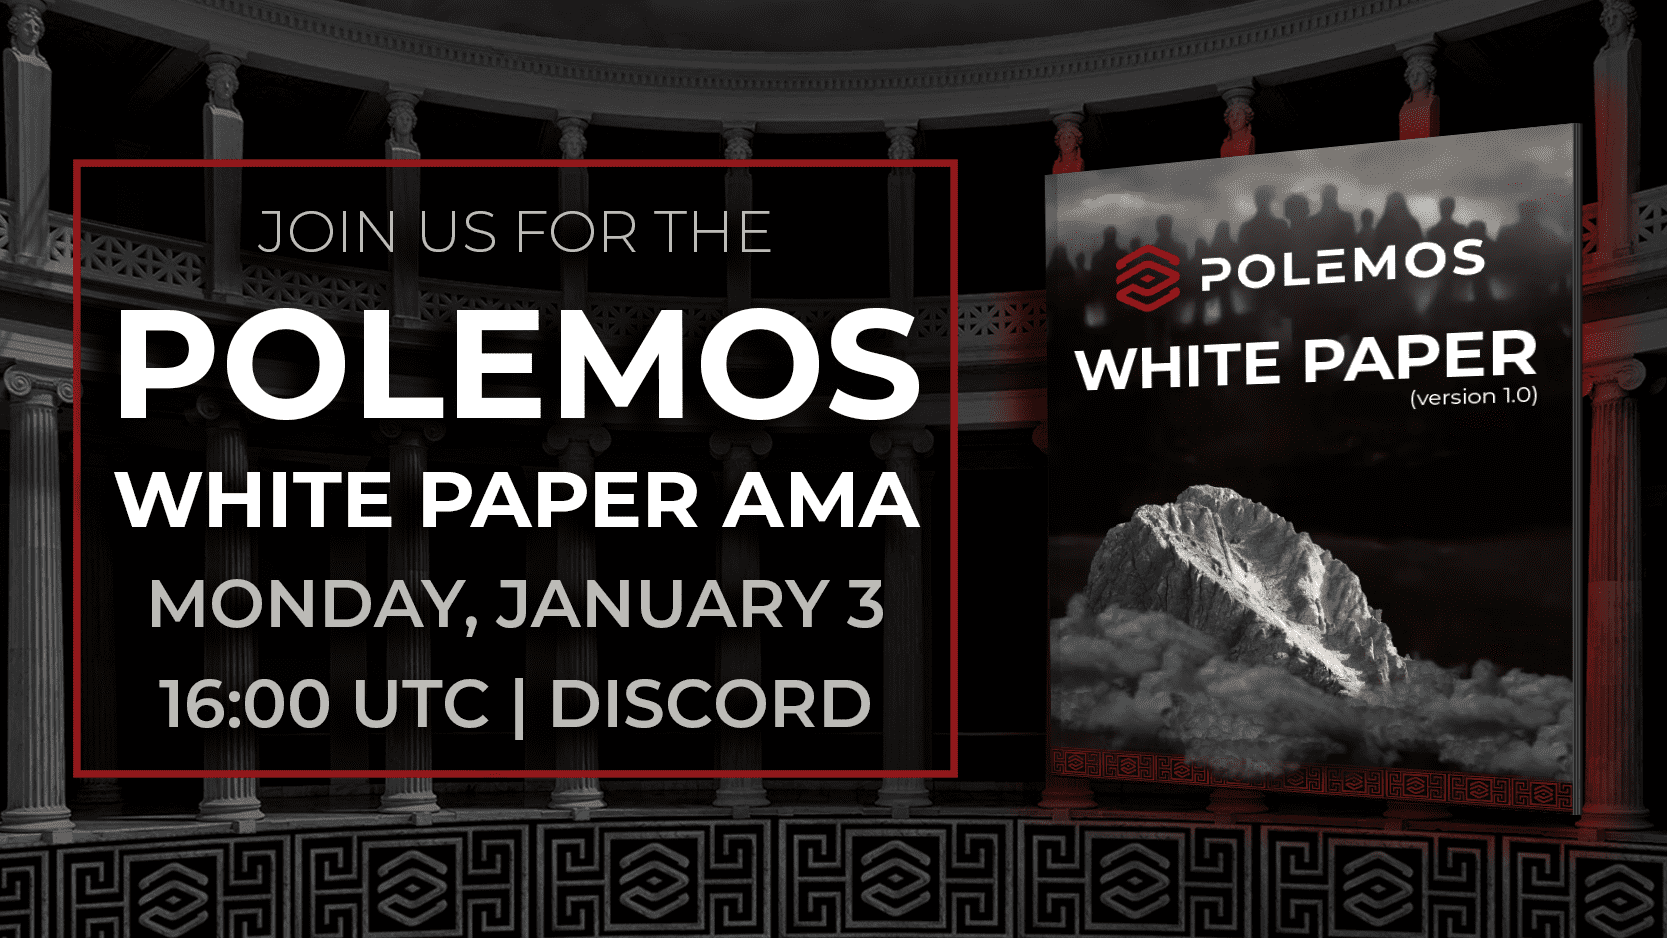 Polemos White Paper AMA - Monday, January 3 at 16:00 UTC on Discord